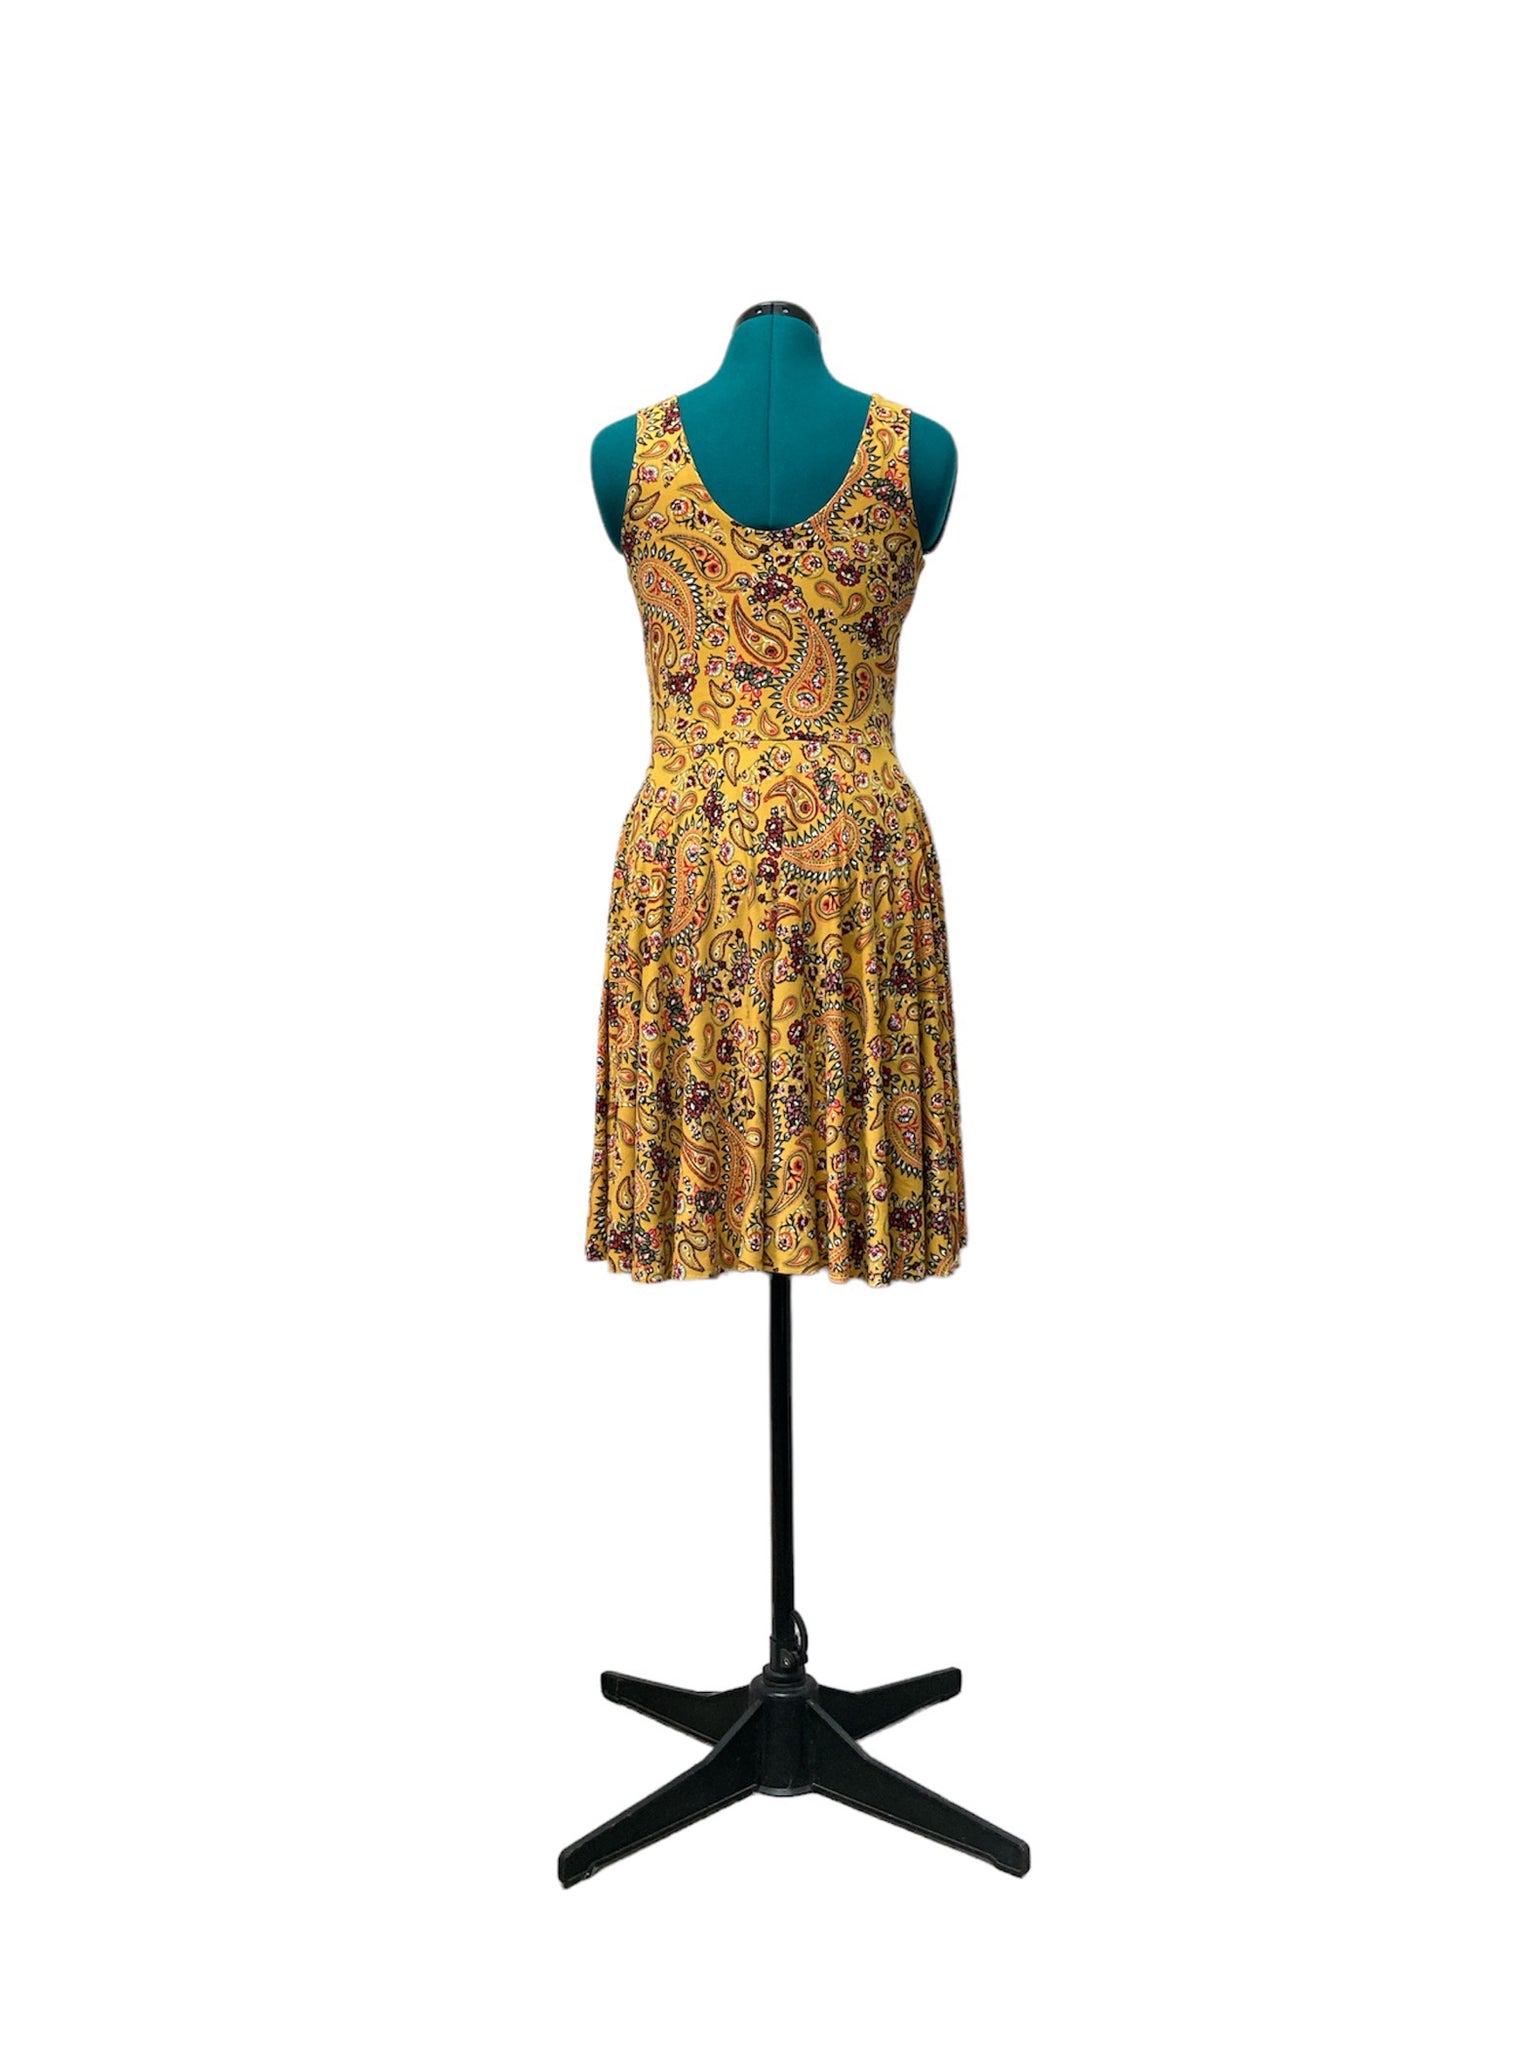 Adult Sleeveless Twirly Dress in Mustard Paisley Size 4